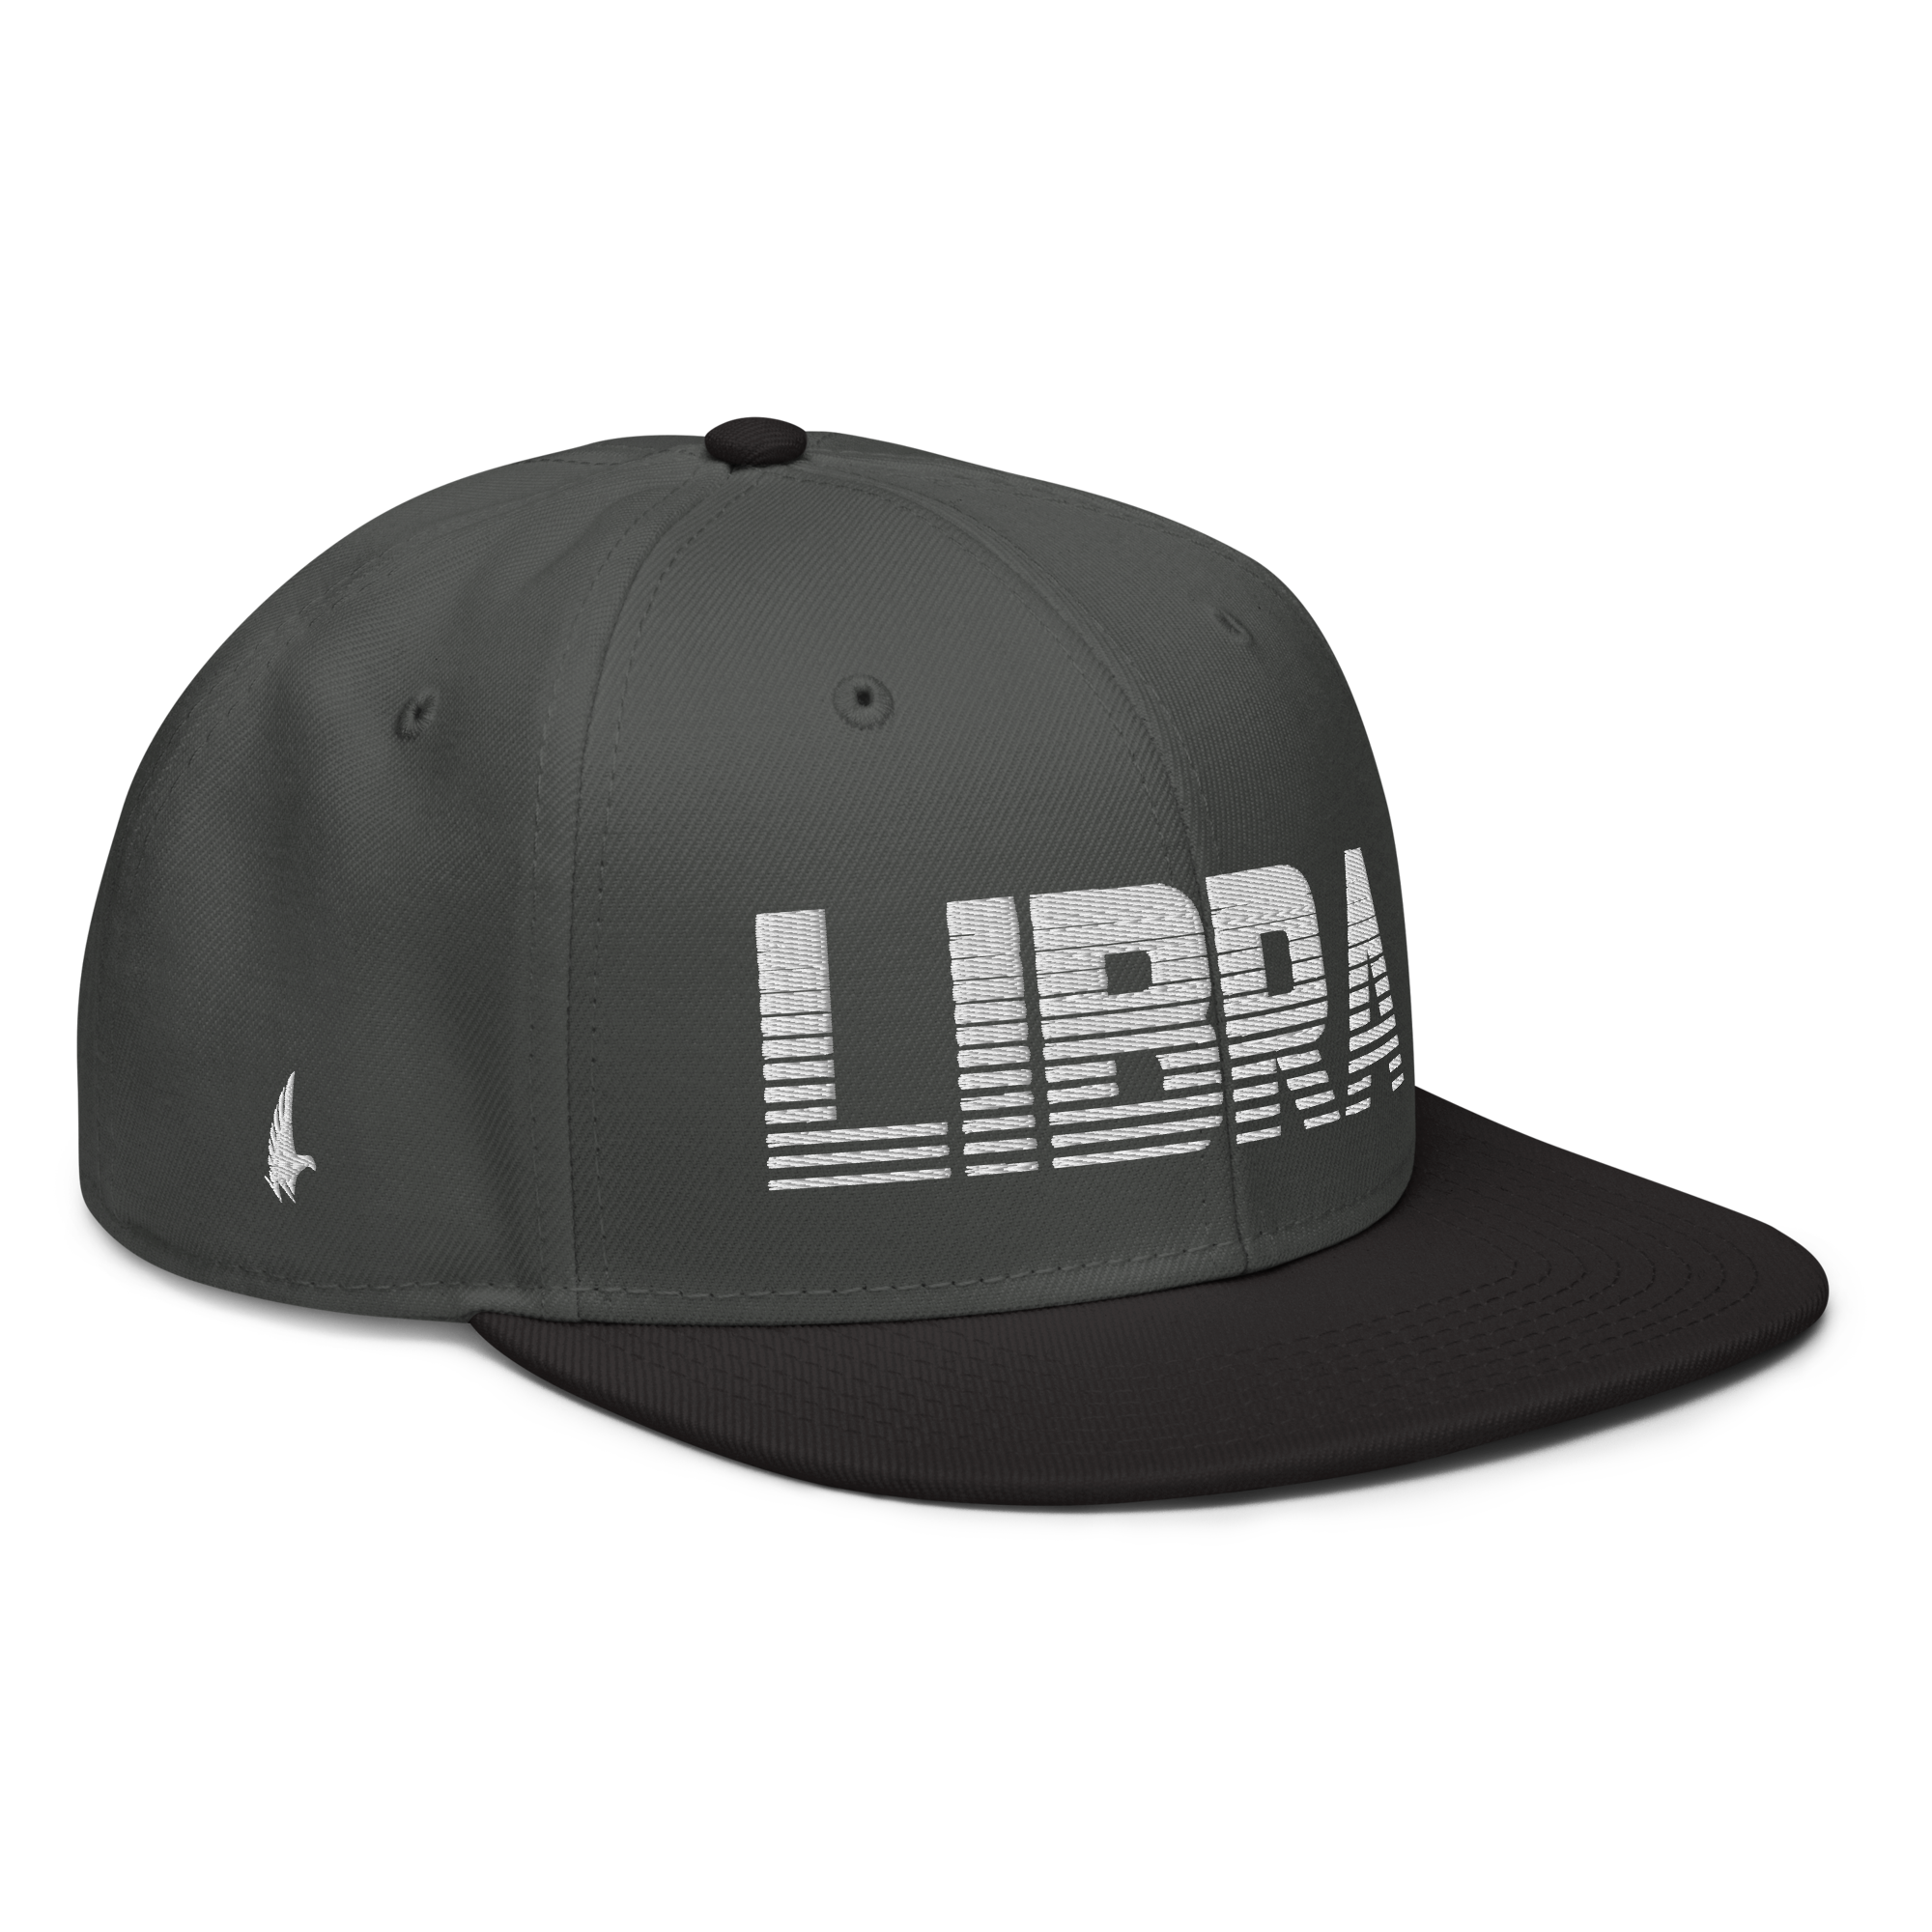 Libra Snapback Hat - Charcoal Gray / White / Black - Loyalty Vibes